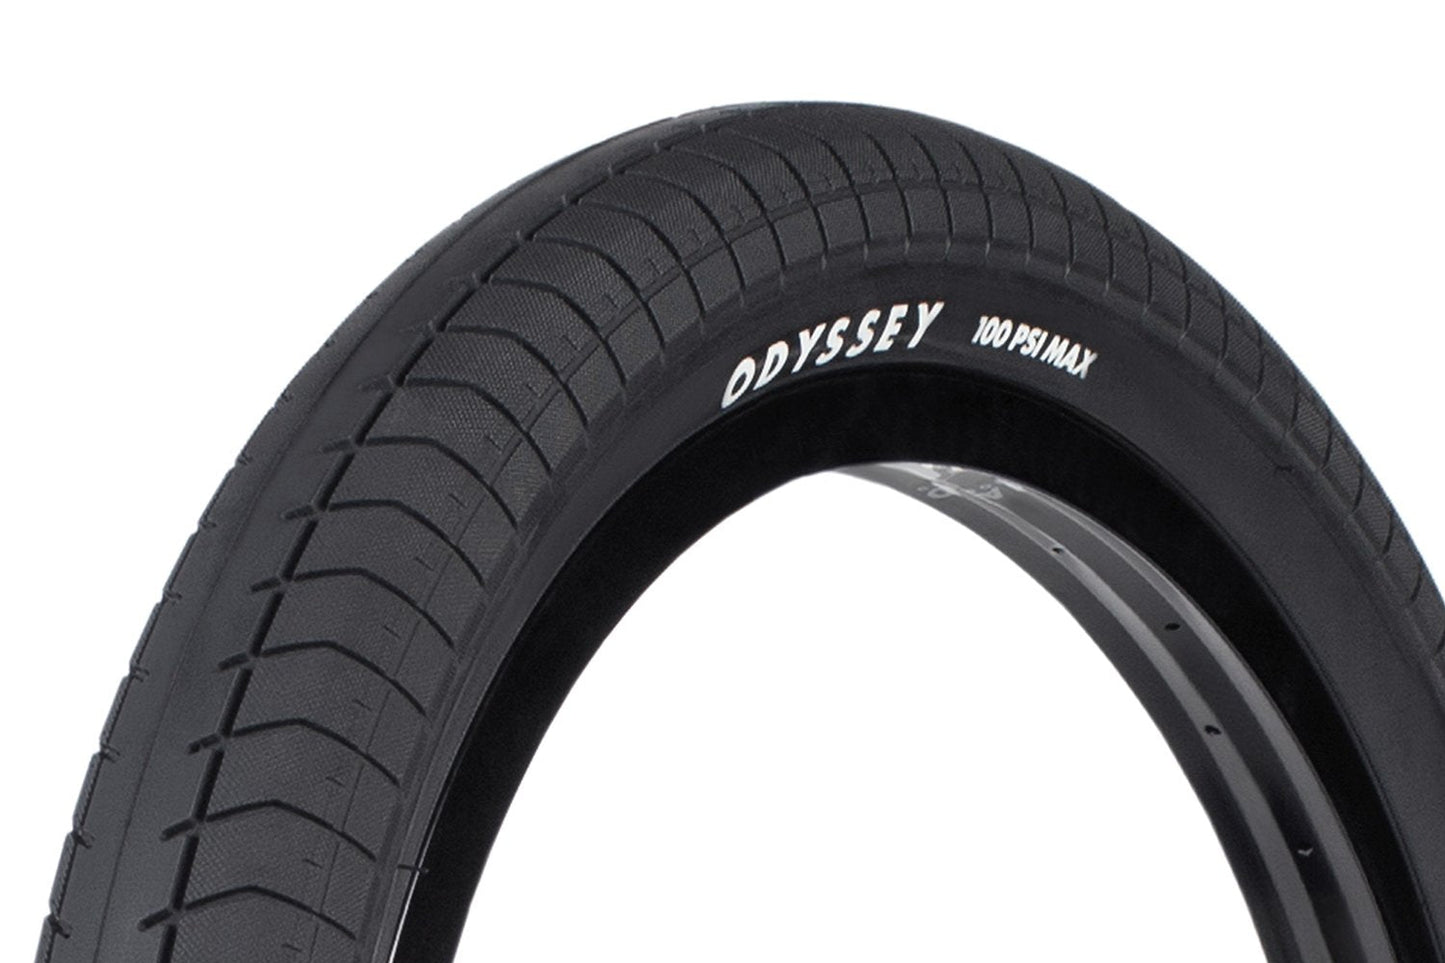 Odyssey Path Pro tire (OEM 45-65psi)